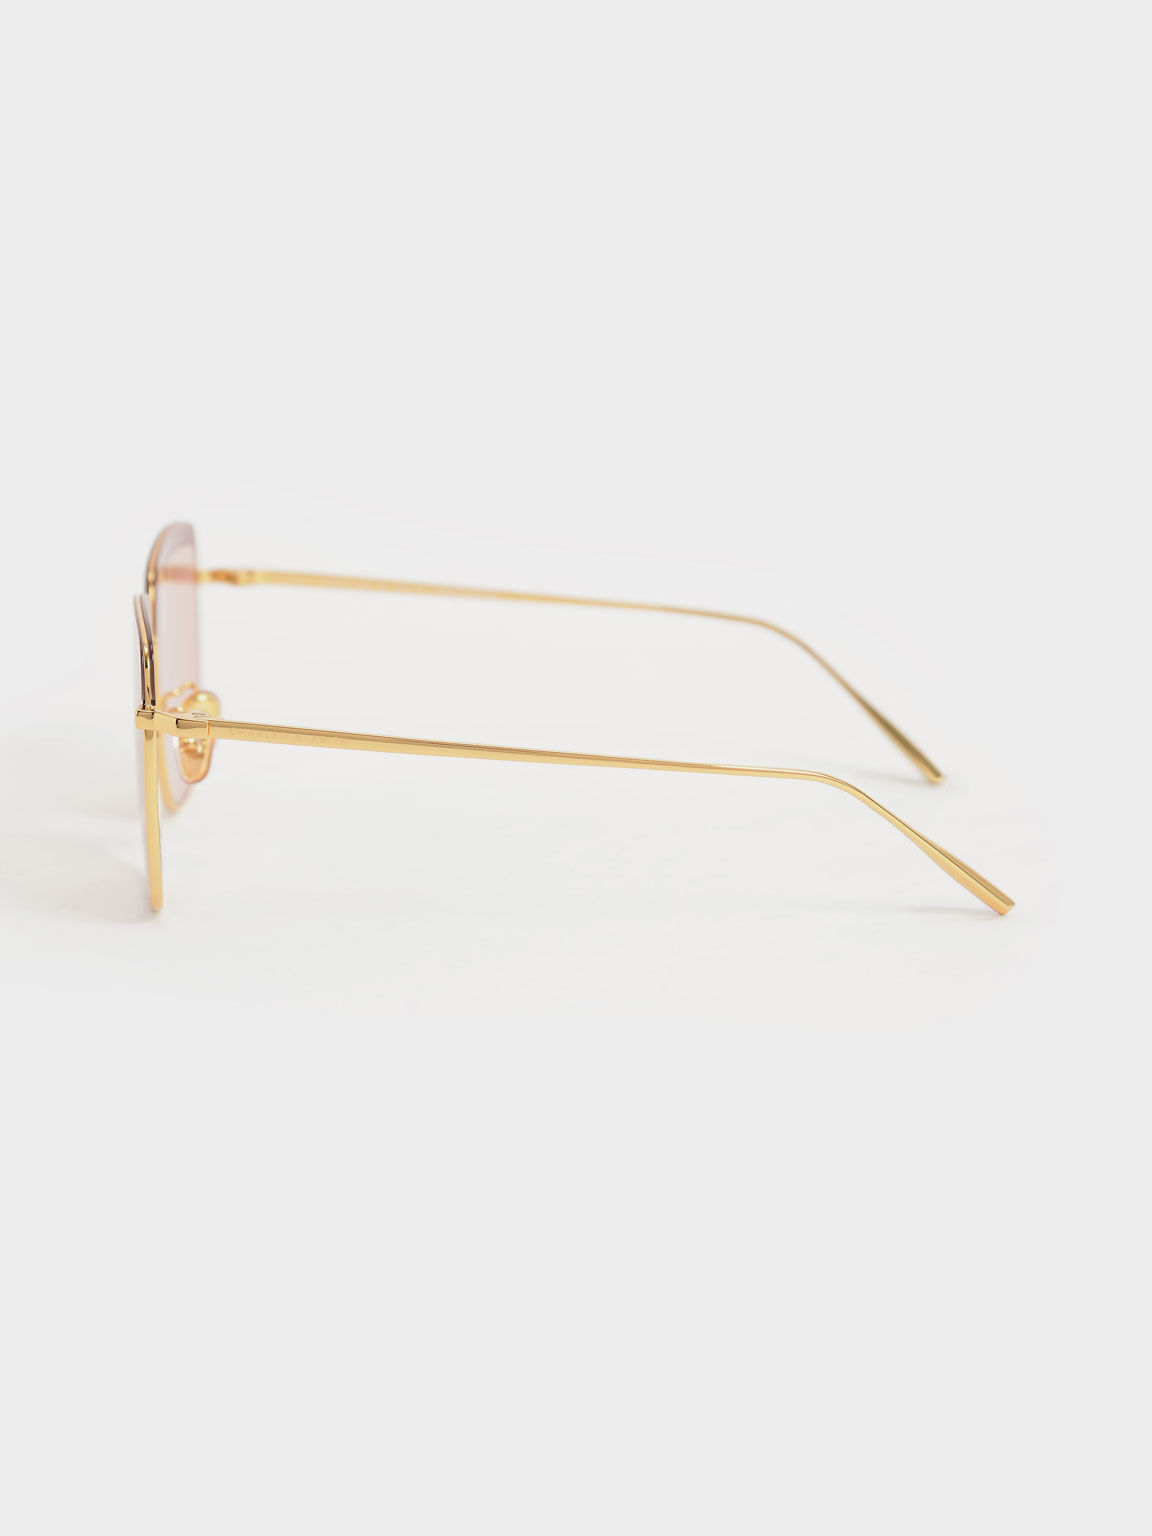 Thin Metal Frame Square Sunglasses, Pink, hi-res